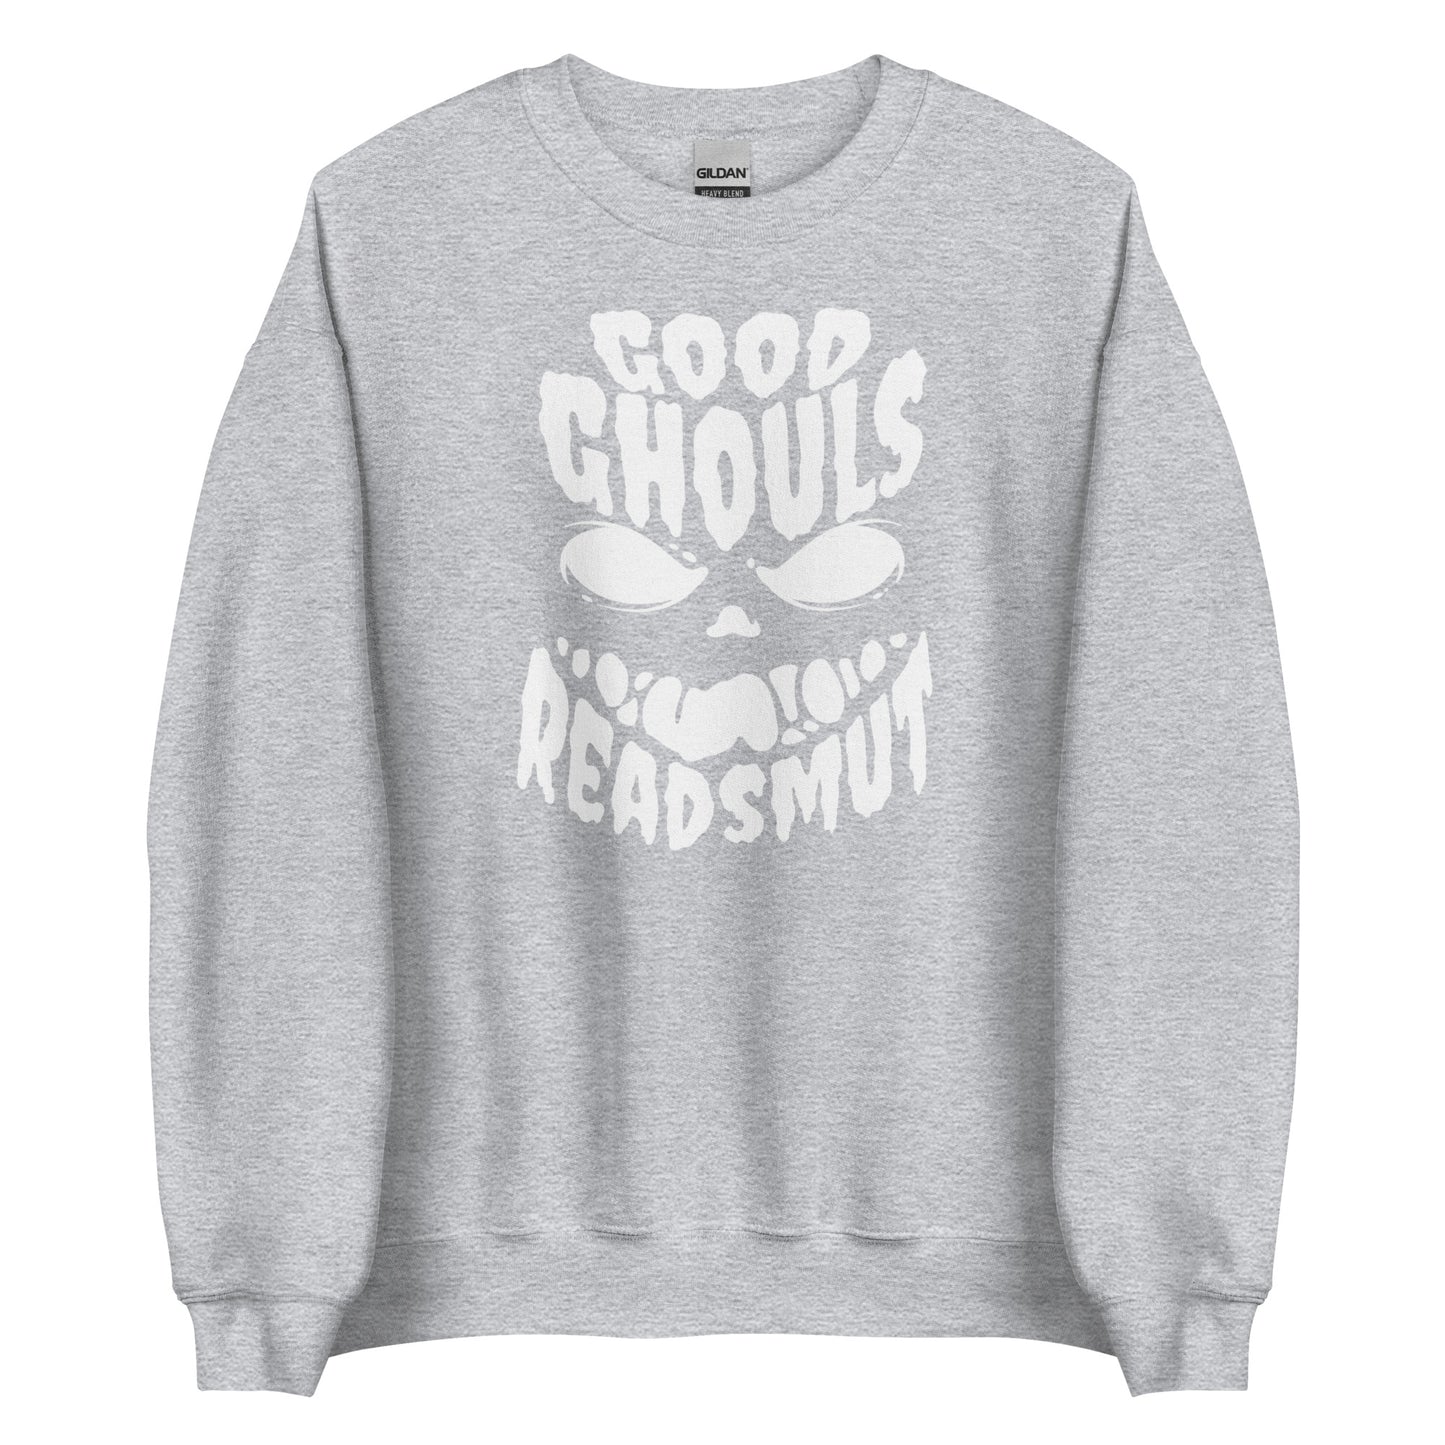 good ghouls read smut sweatshirt